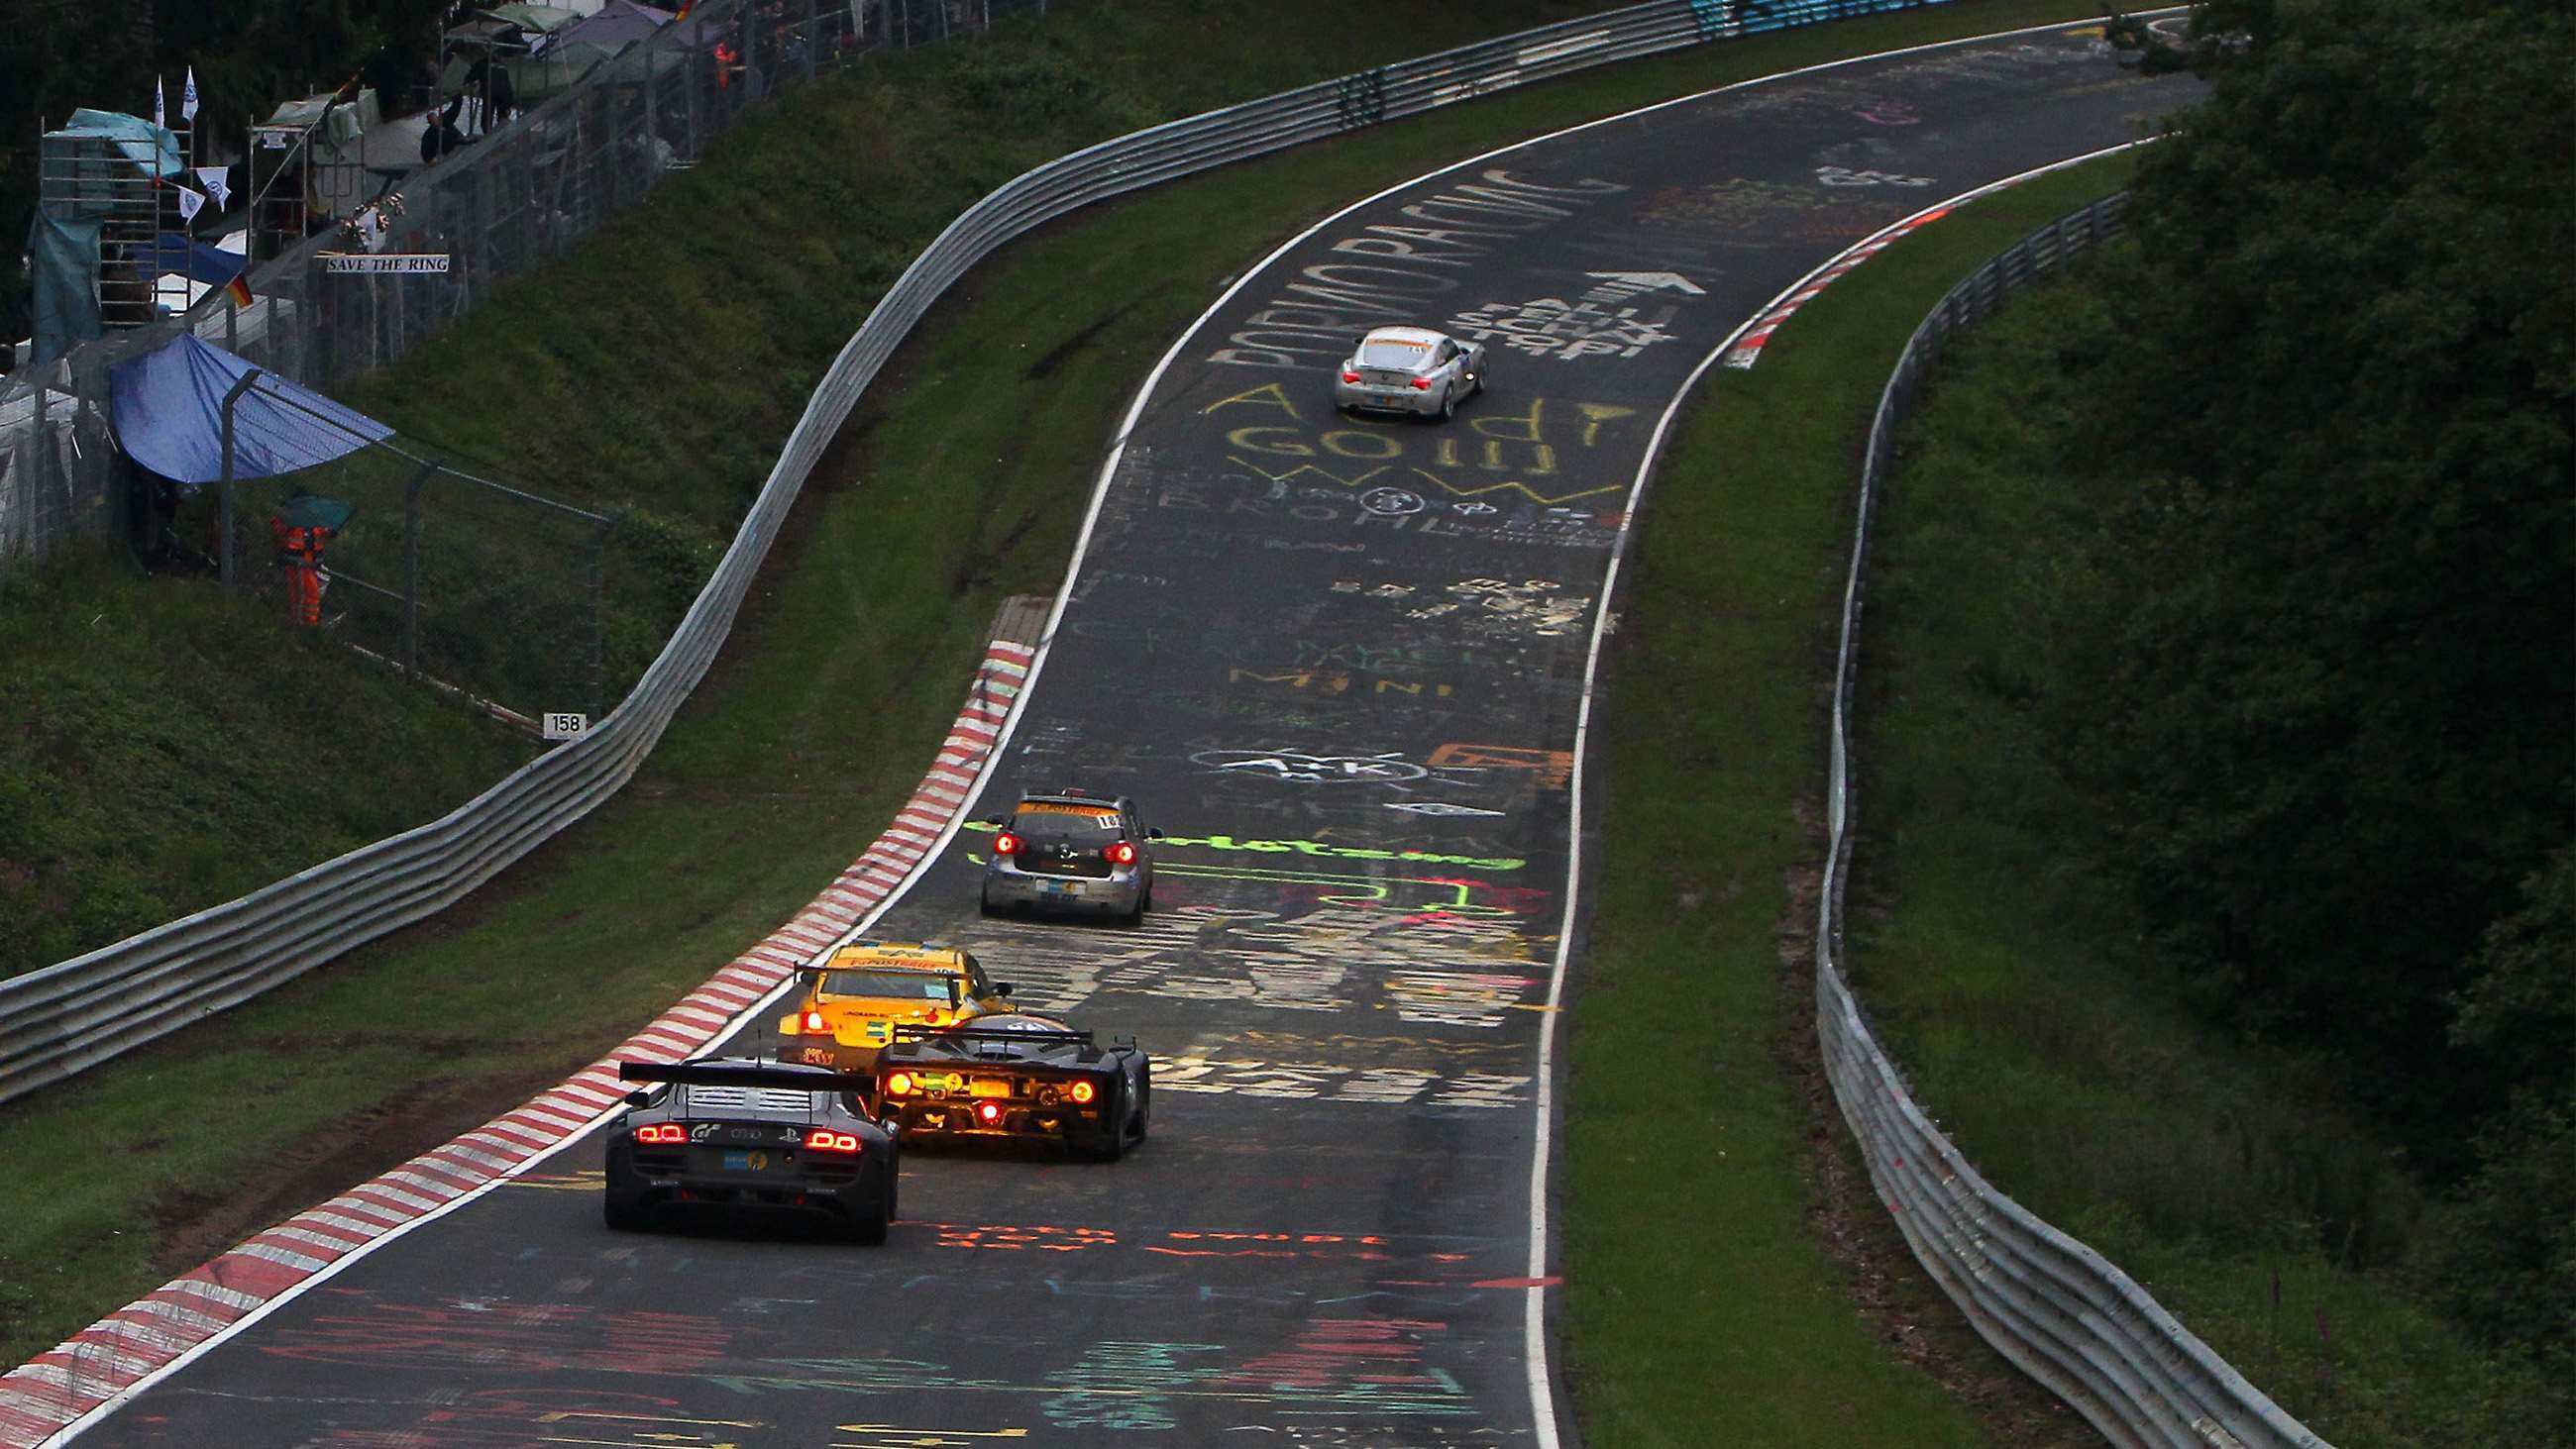 Image courtesy of Motorsport Images.